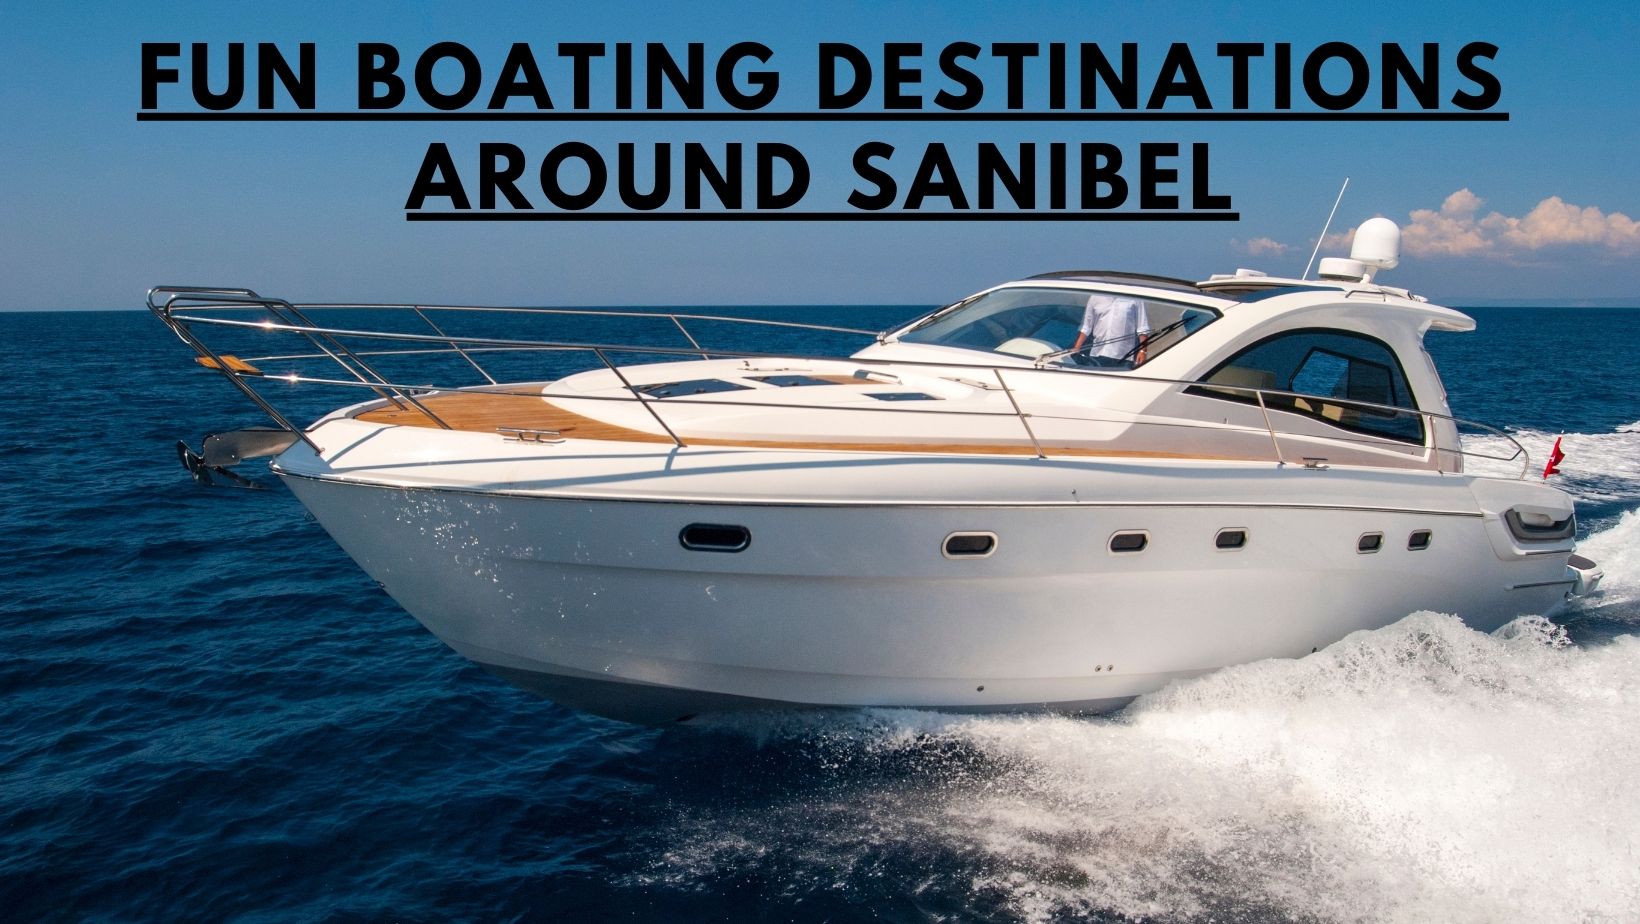 Fun Boating Destinations Around Sanibel